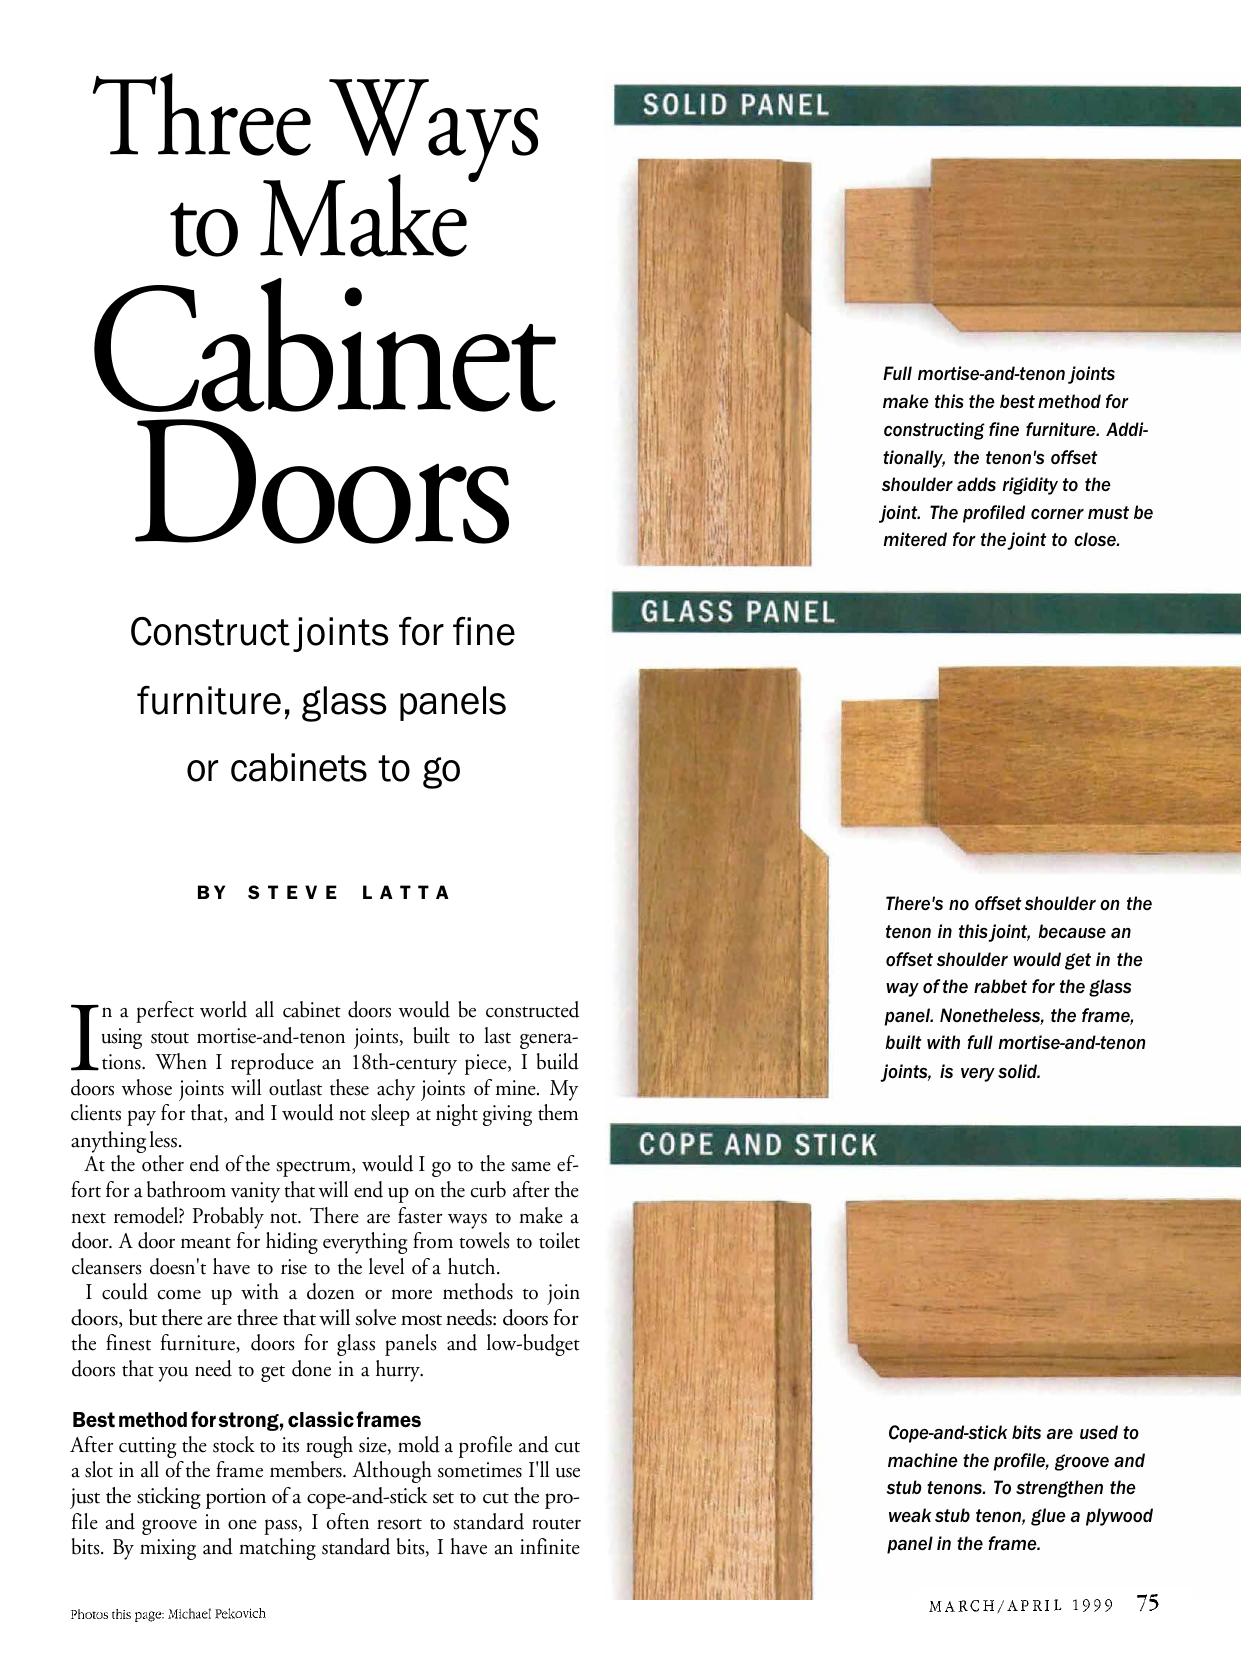 Three Ways to Make Cabinet Doors by Steve Latta